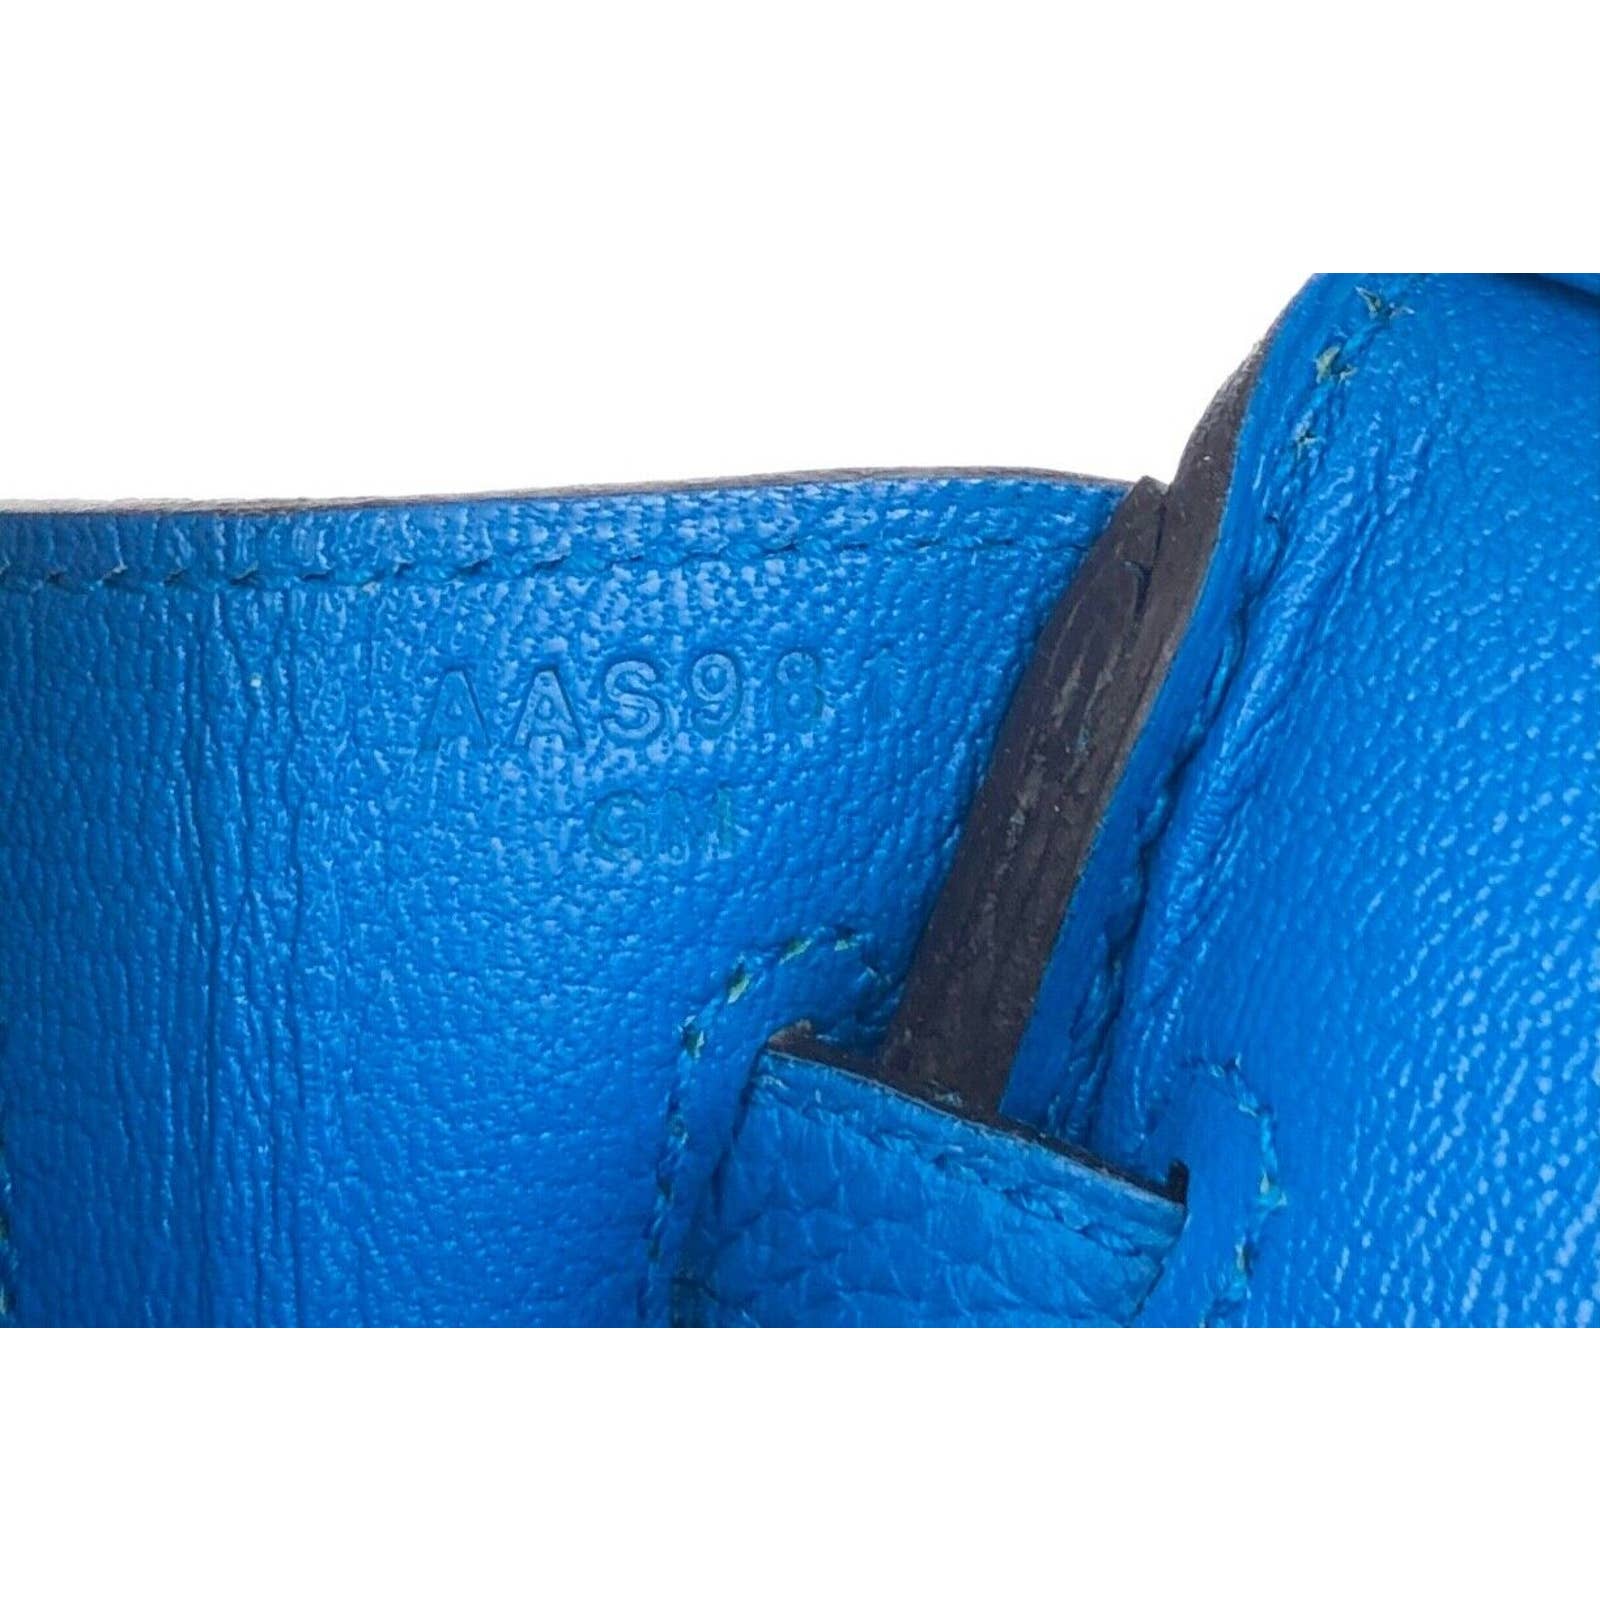 Hermes Birkin 25 Handbag B3 Blue Zanzibar Togo SHW